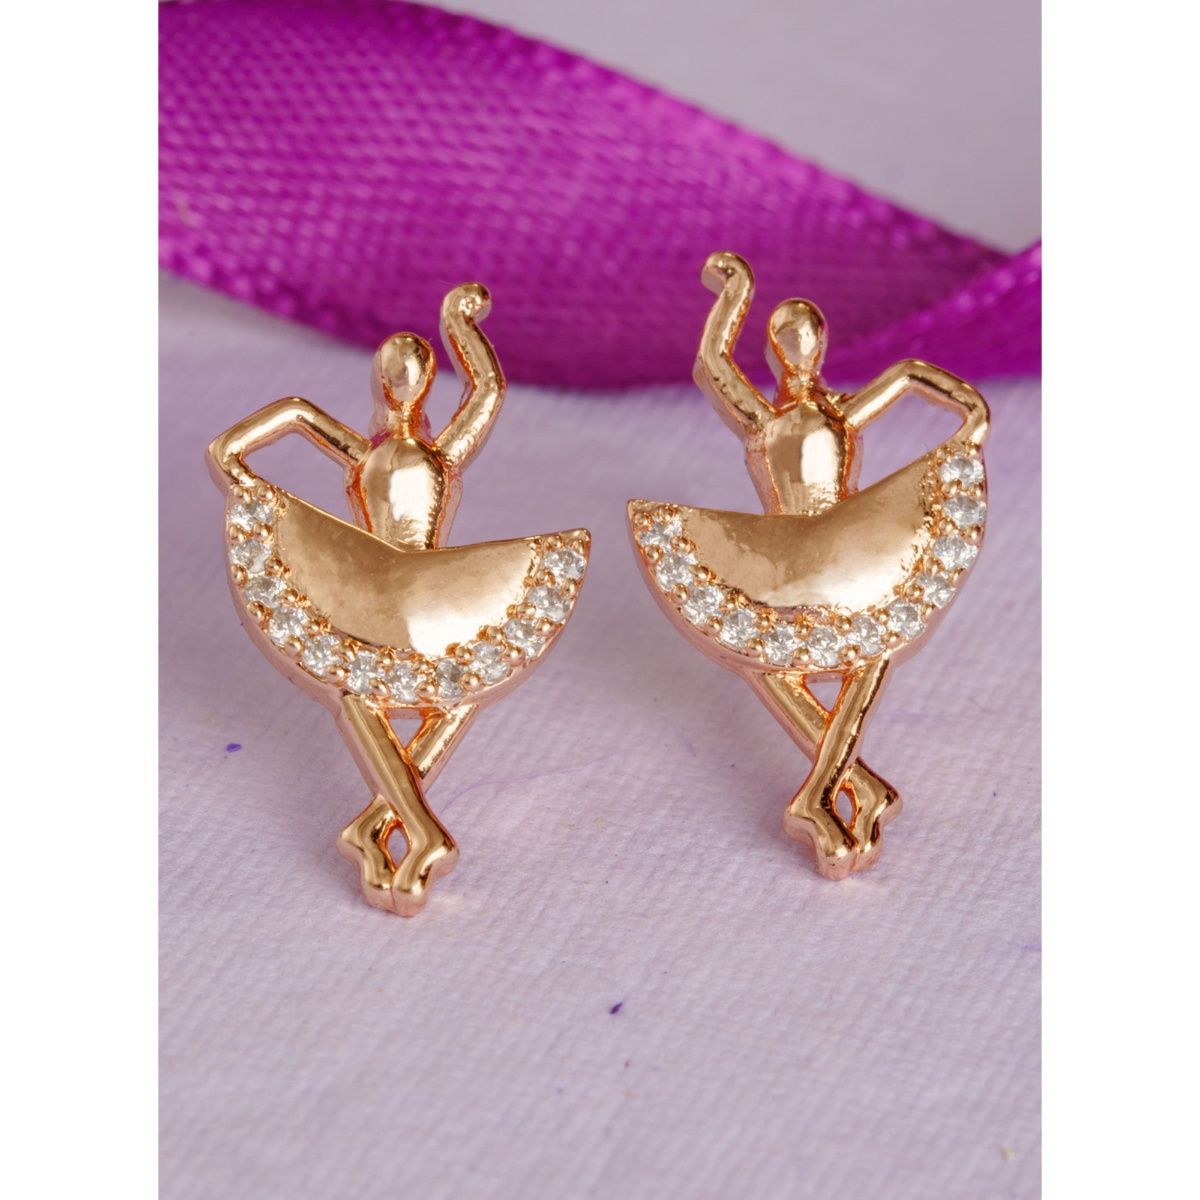 Buy quality 916 Gold Ladies EarringsLFE141 in Ahmedabad